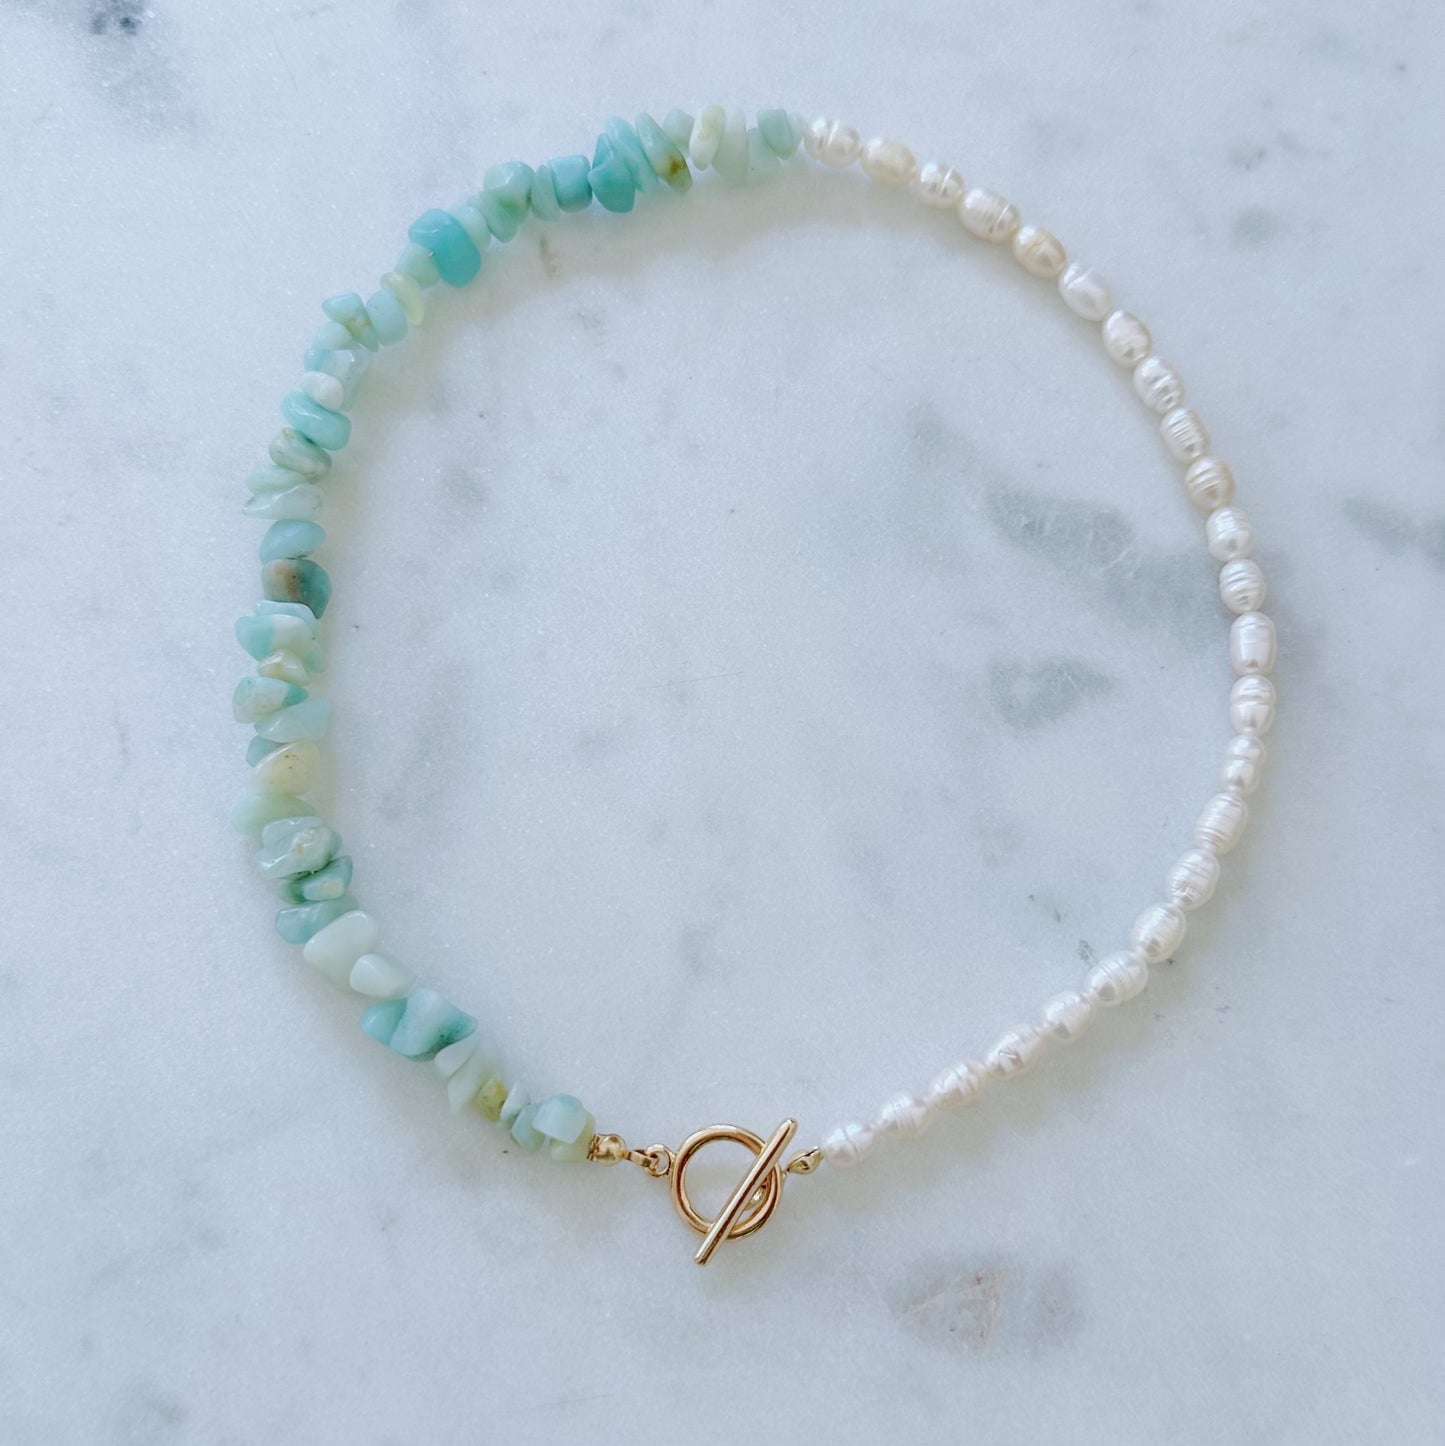 Bora Bora turquoise and pearl necklace